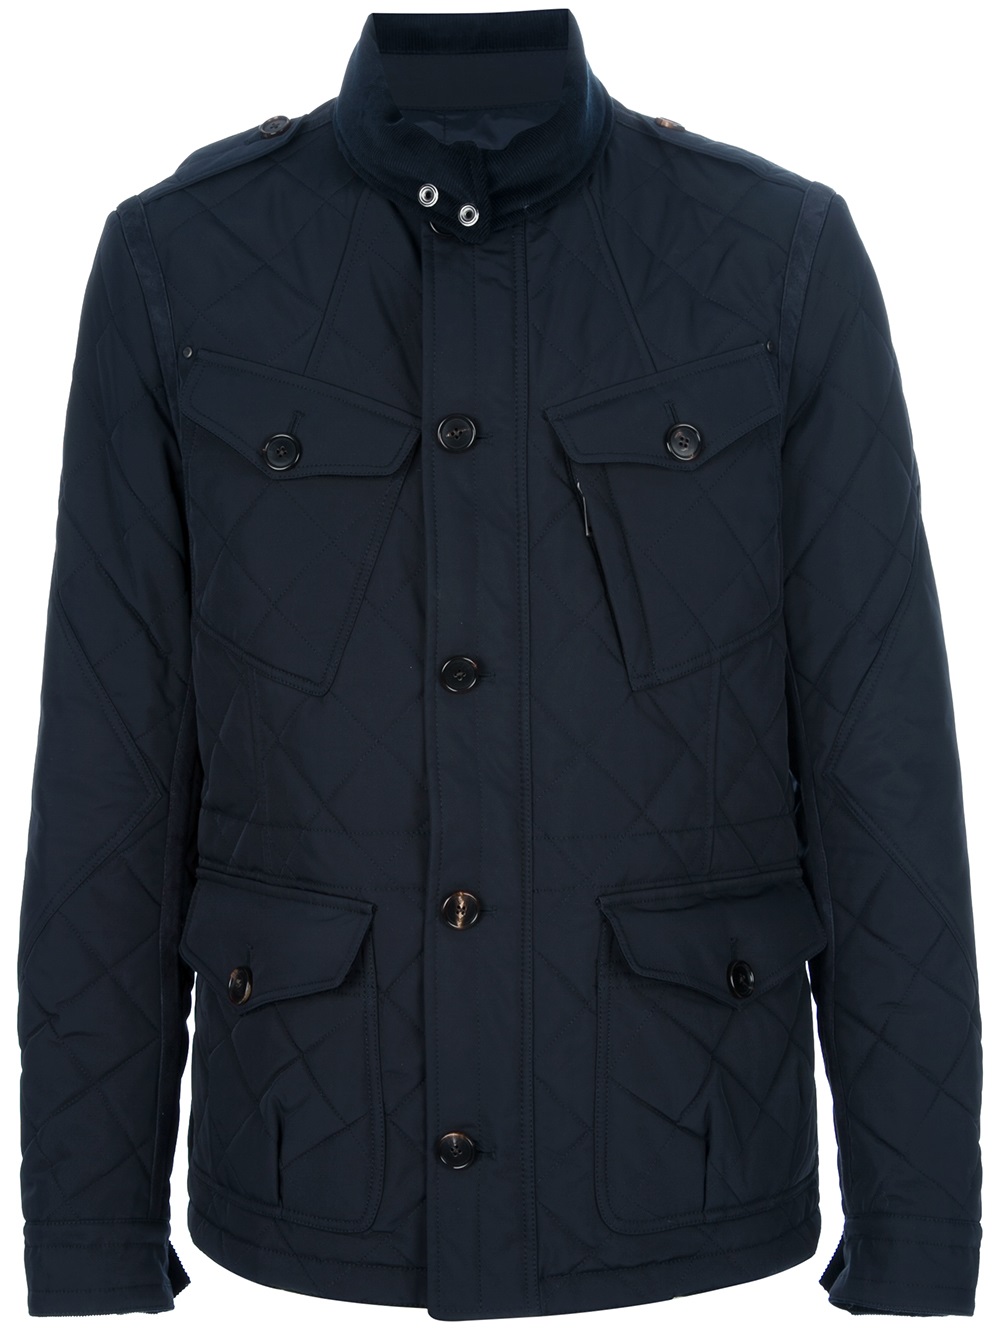 Lyst - Ralph lauren black label Quilted Button Down Jacket in Blue for Men